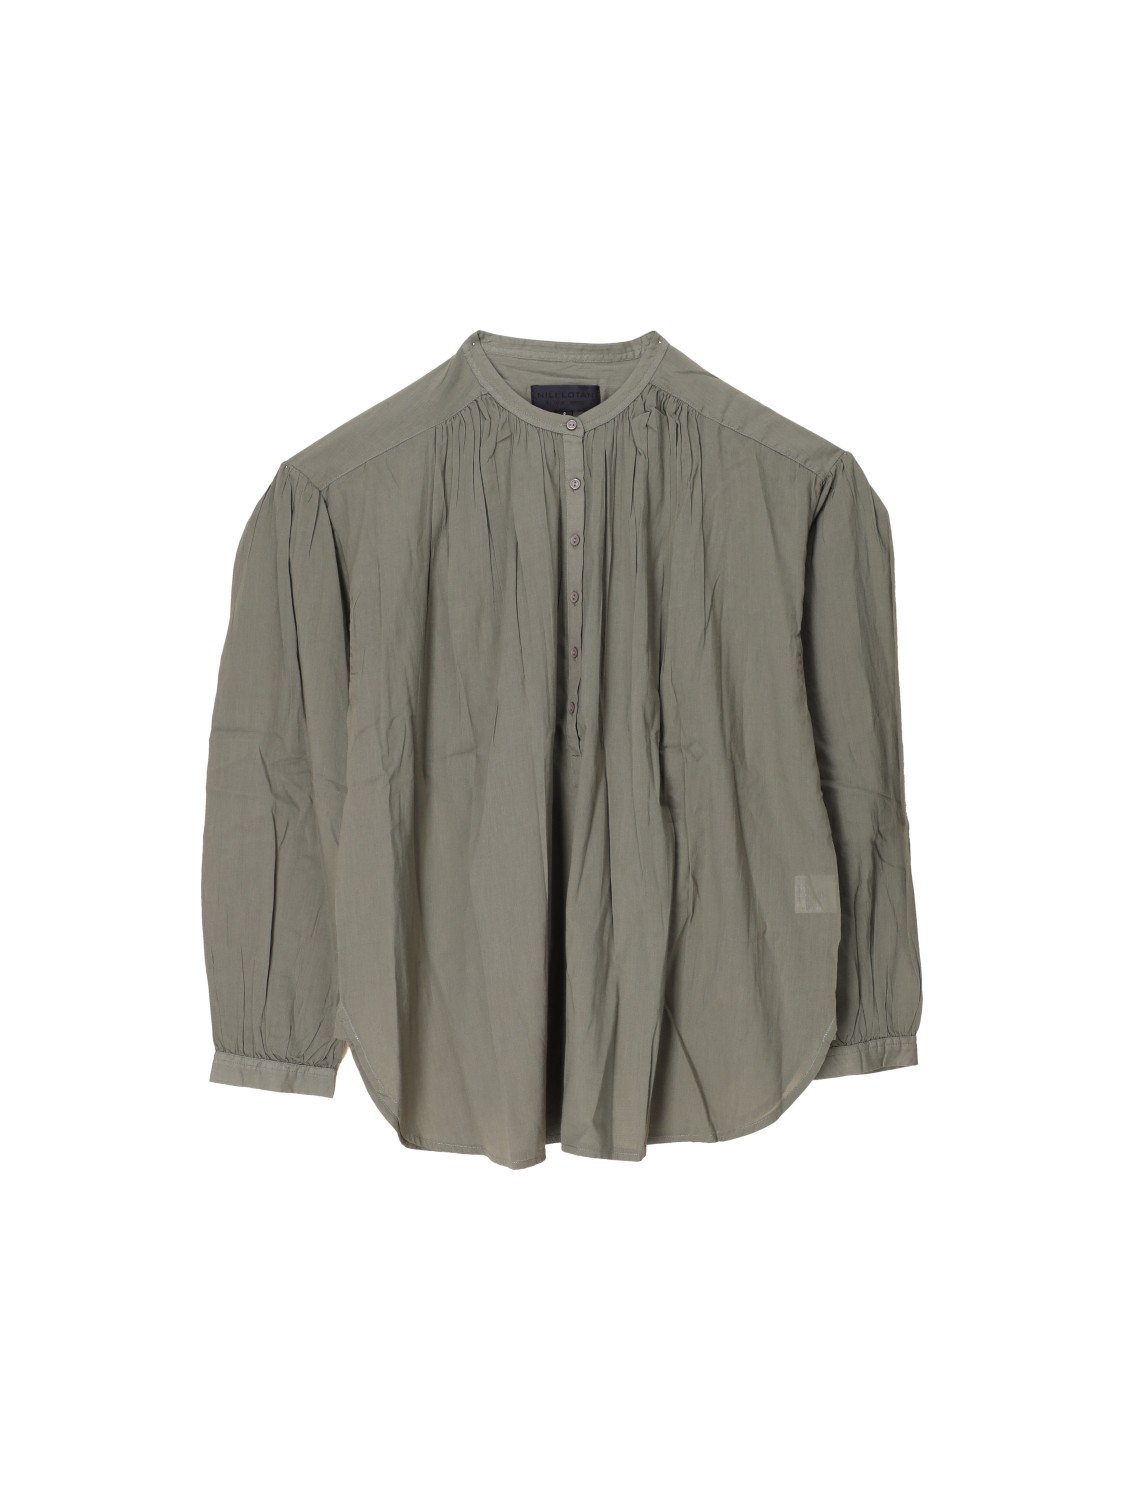 Nili Lotan Neville cotton voile sweater blouse  khaki M